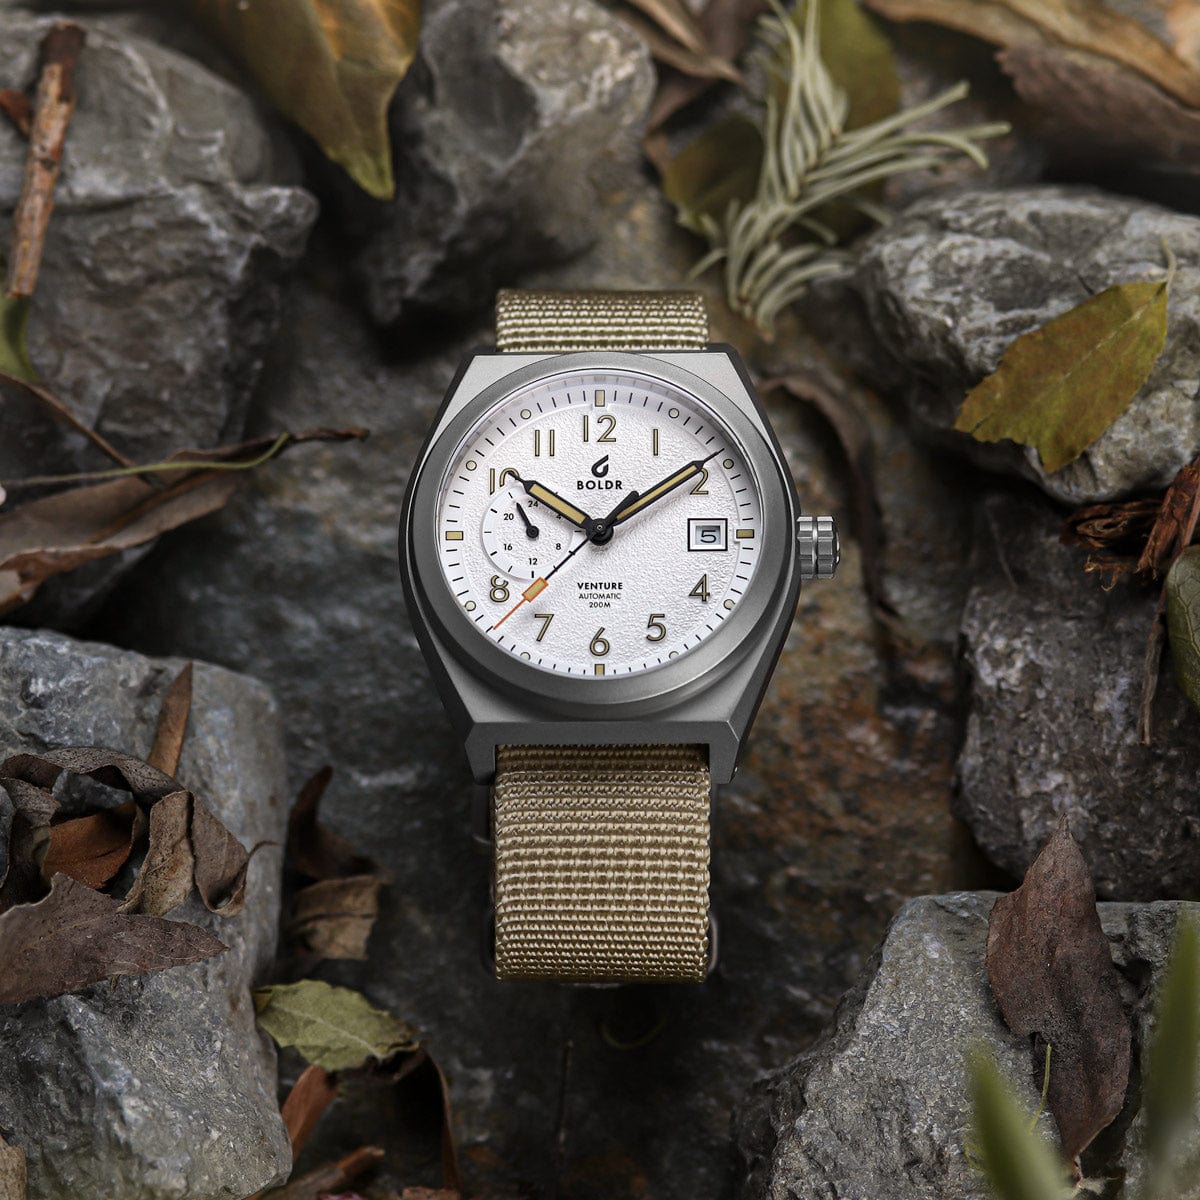 Boldr Venture Wayfarer Khaki Automatic Watch